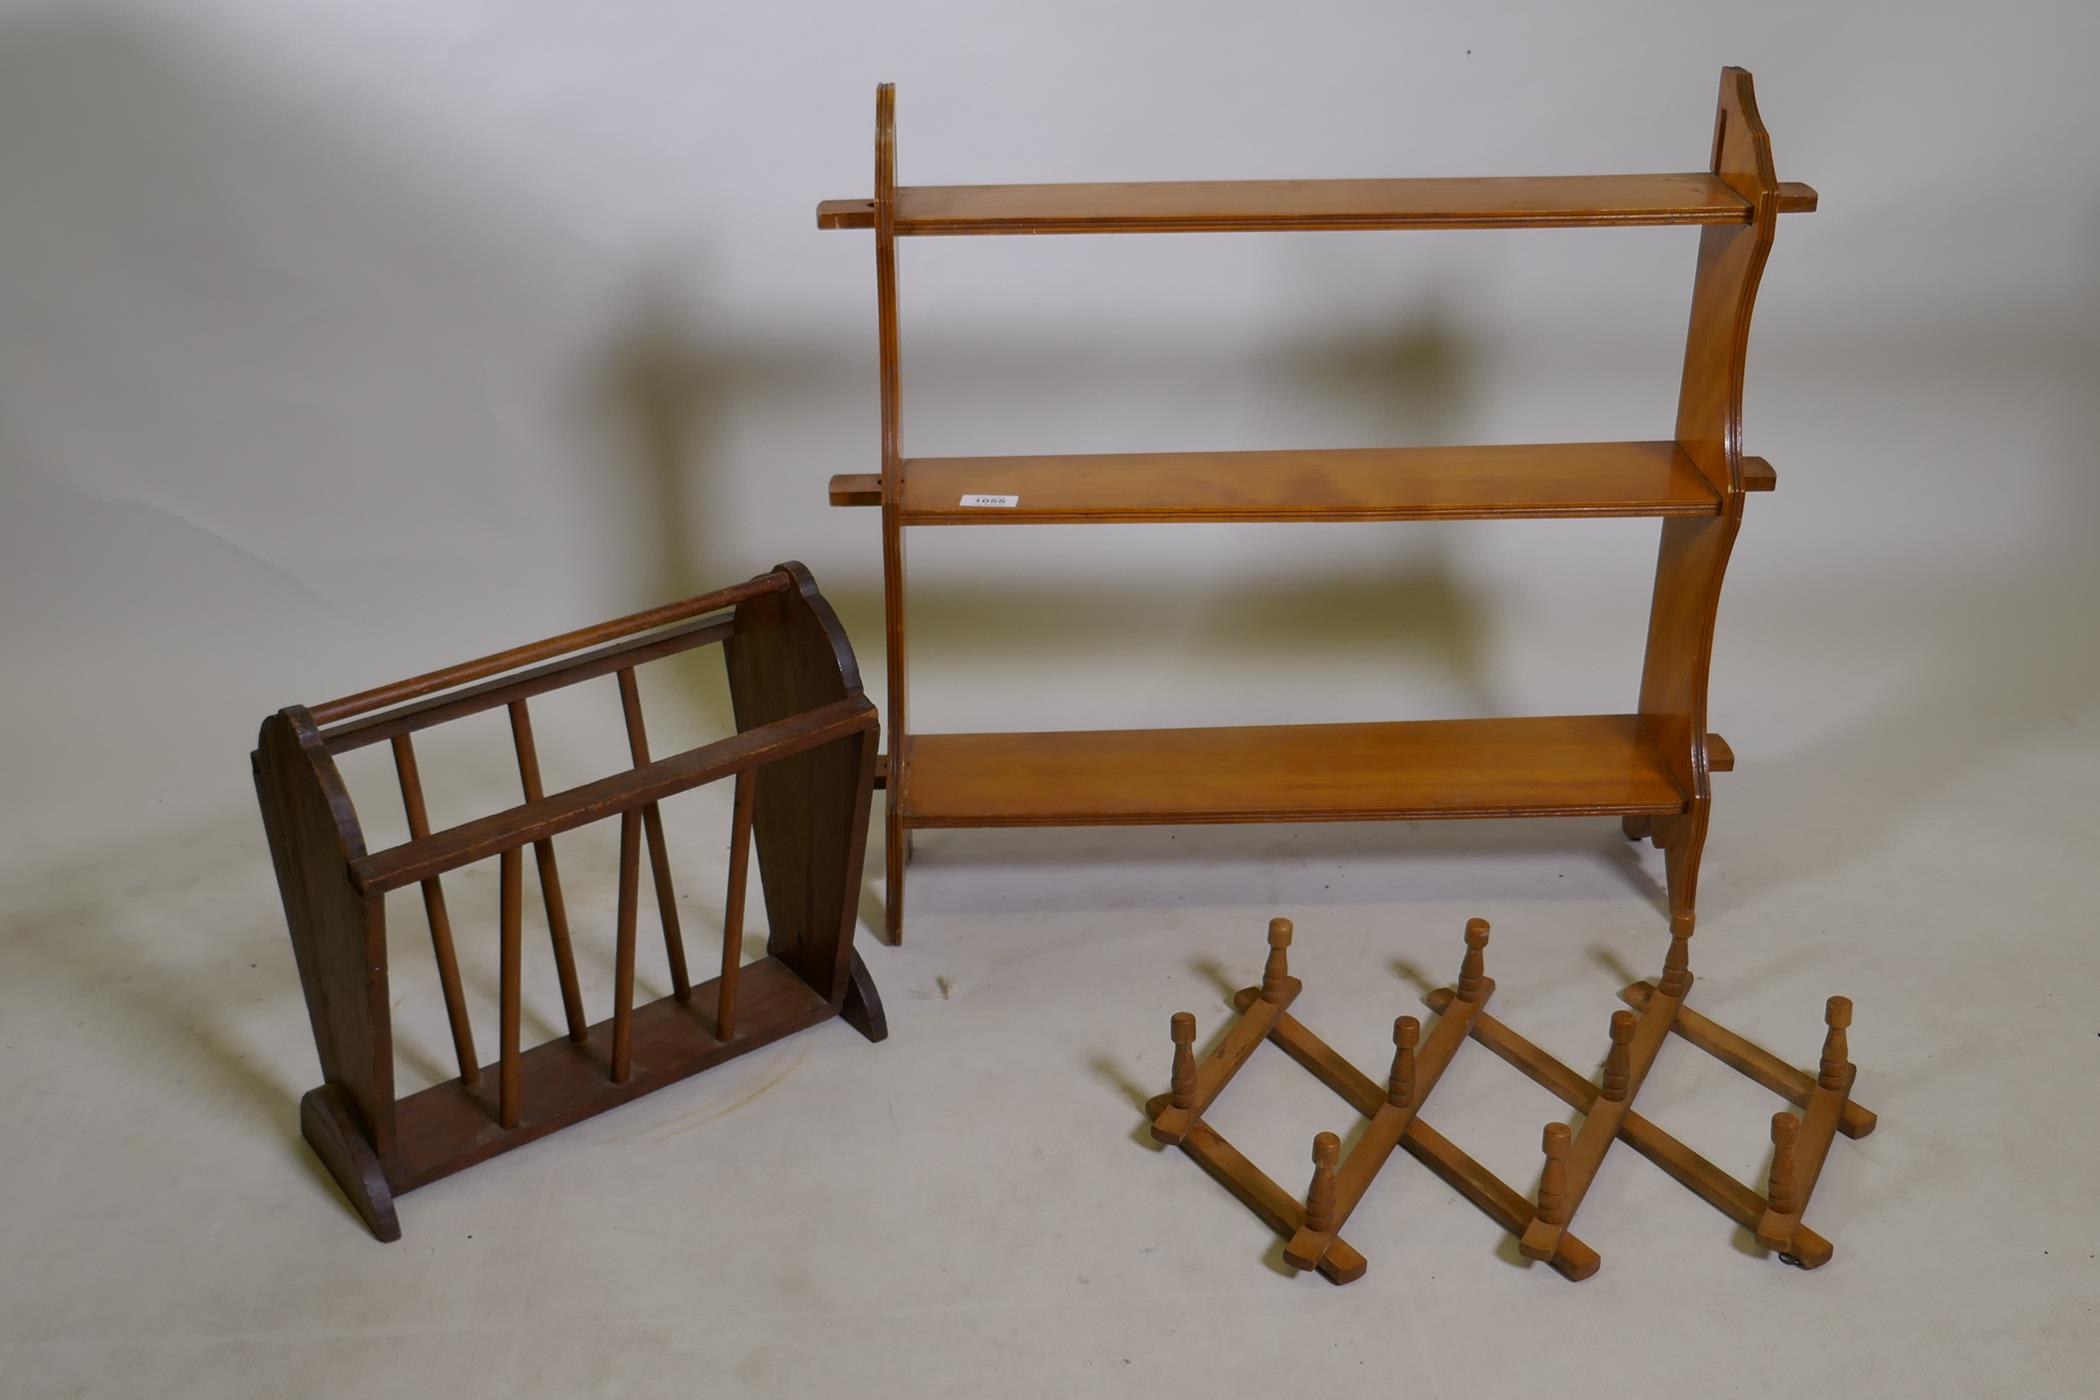 A C19th satinwood open shelf, 59 x 66 x 16cm, AF lacks pegs, a magazine rack and folding coat rack